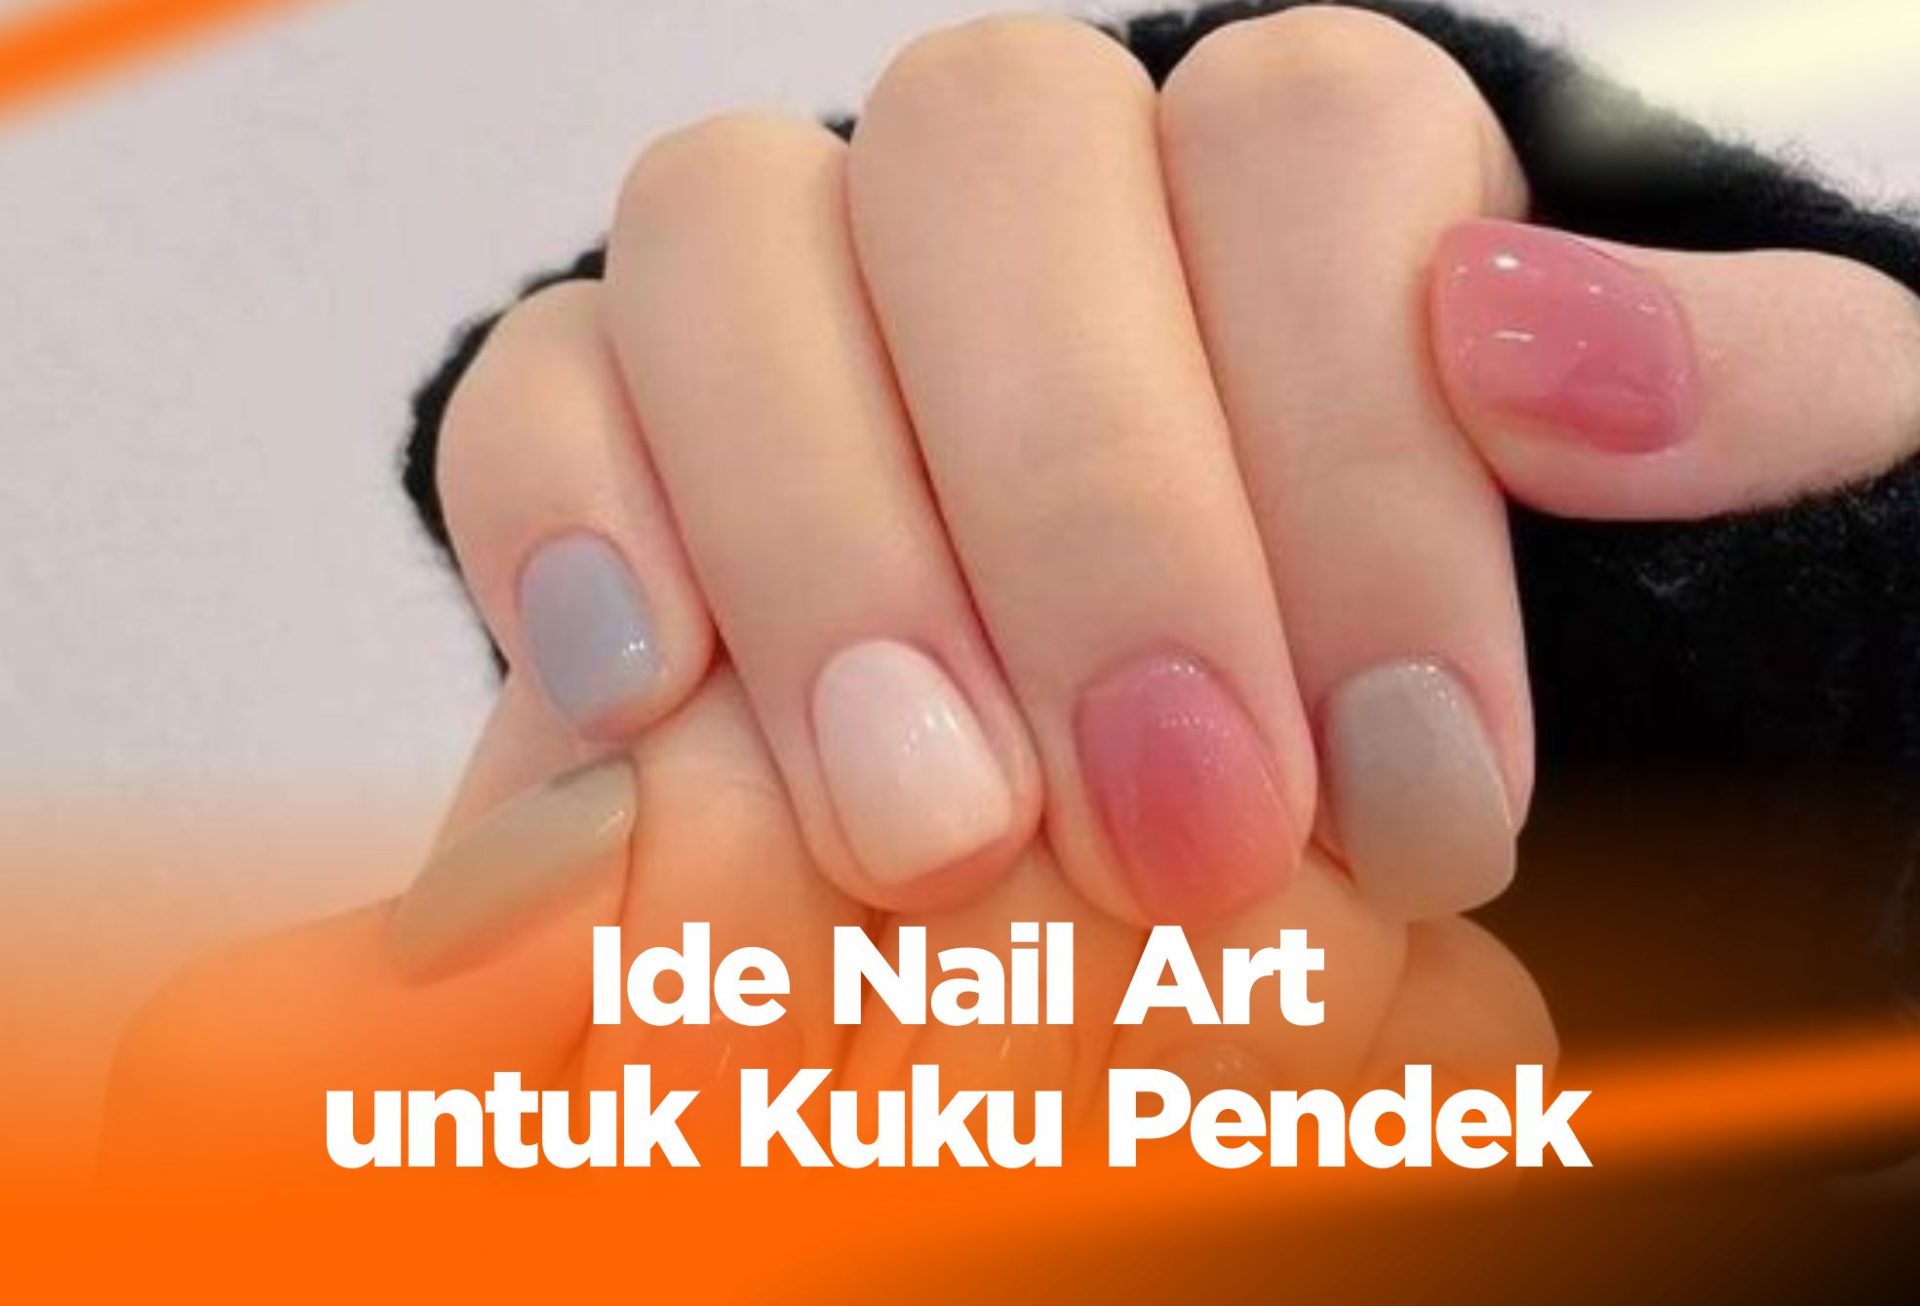 Minimalist Nail Art for Short Nails - wide 8